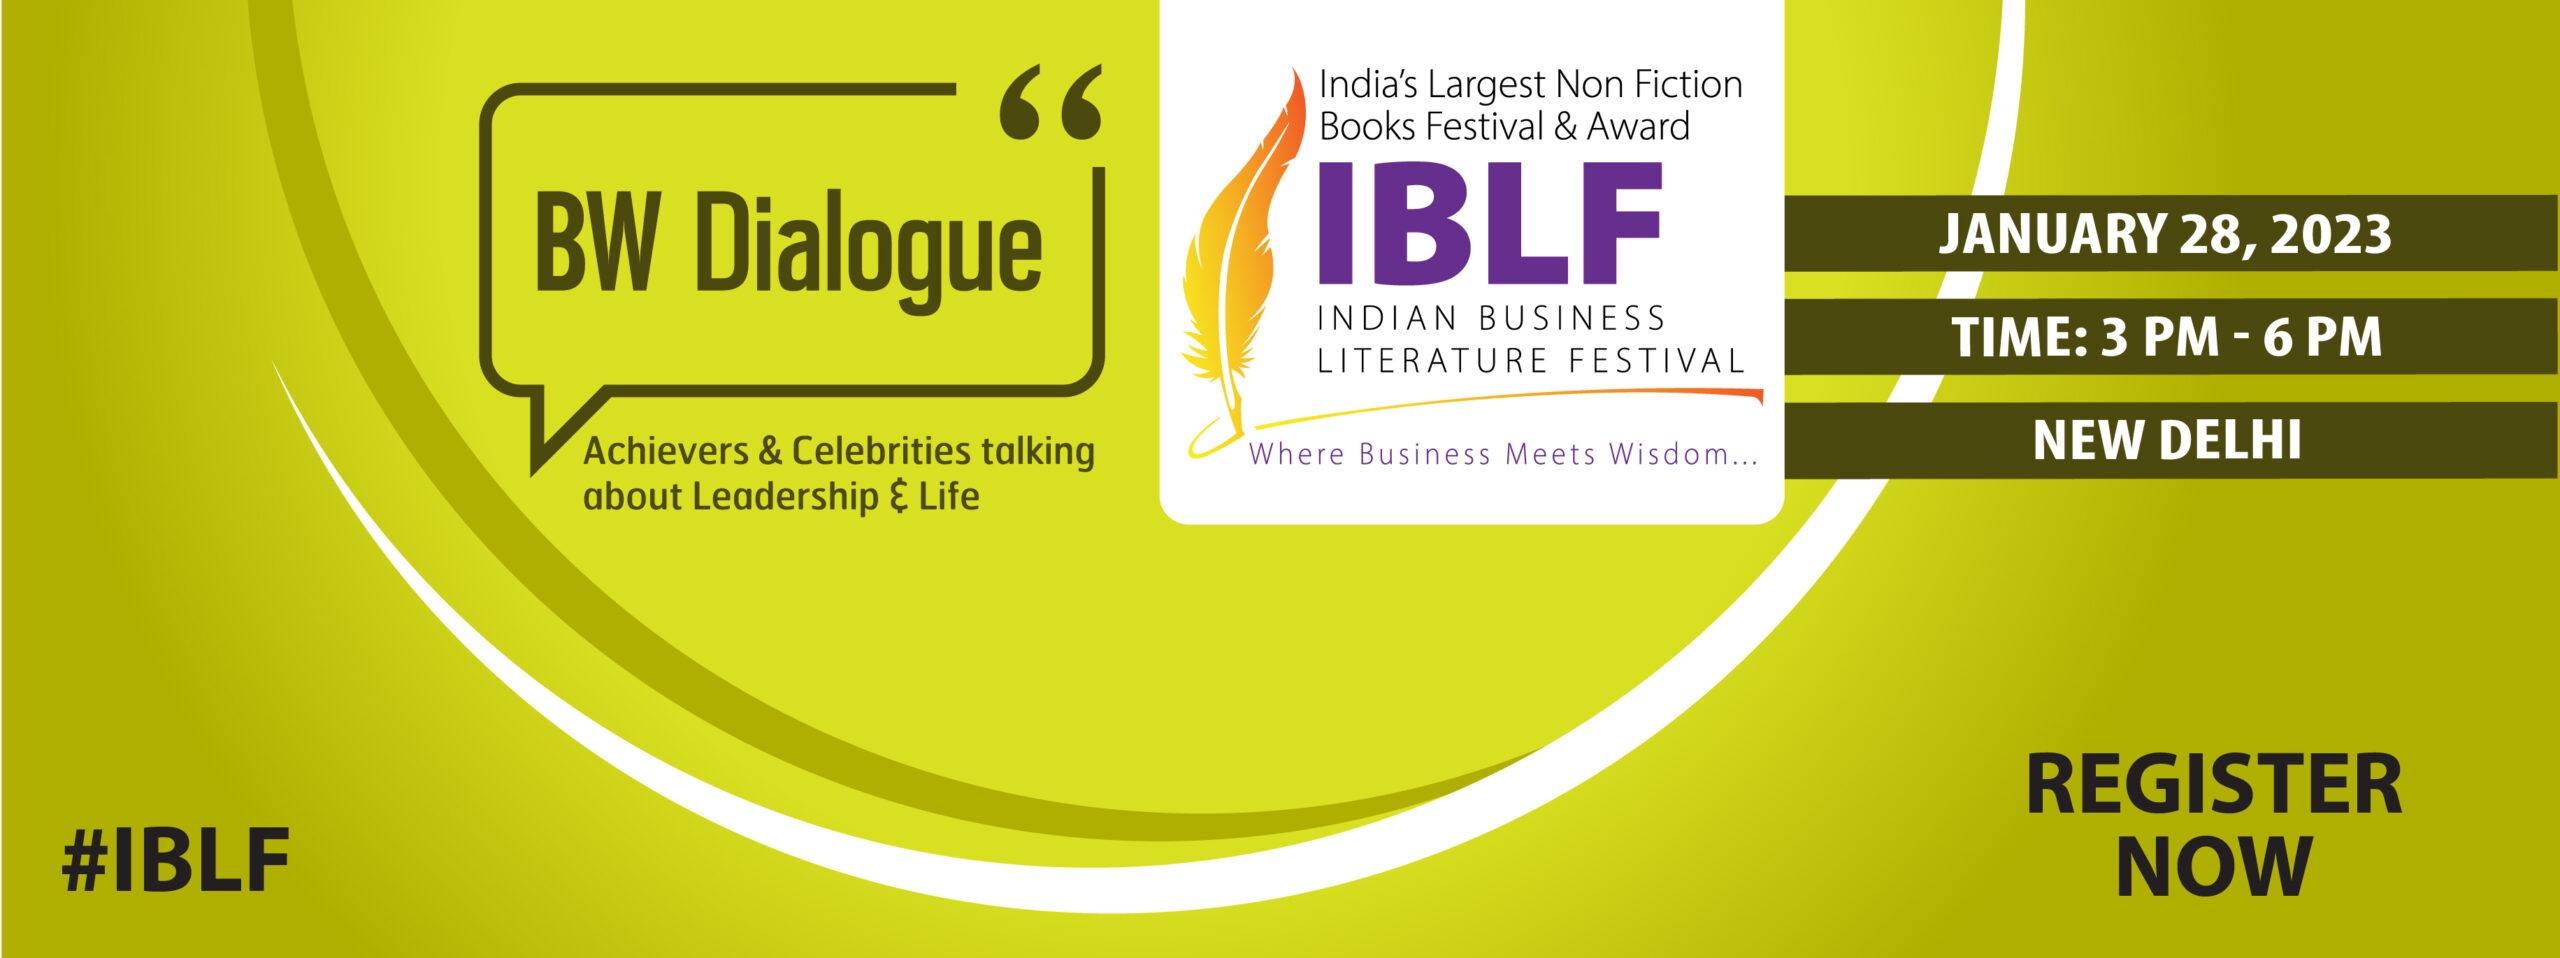 India Business Literature Festival - IBLF Agra